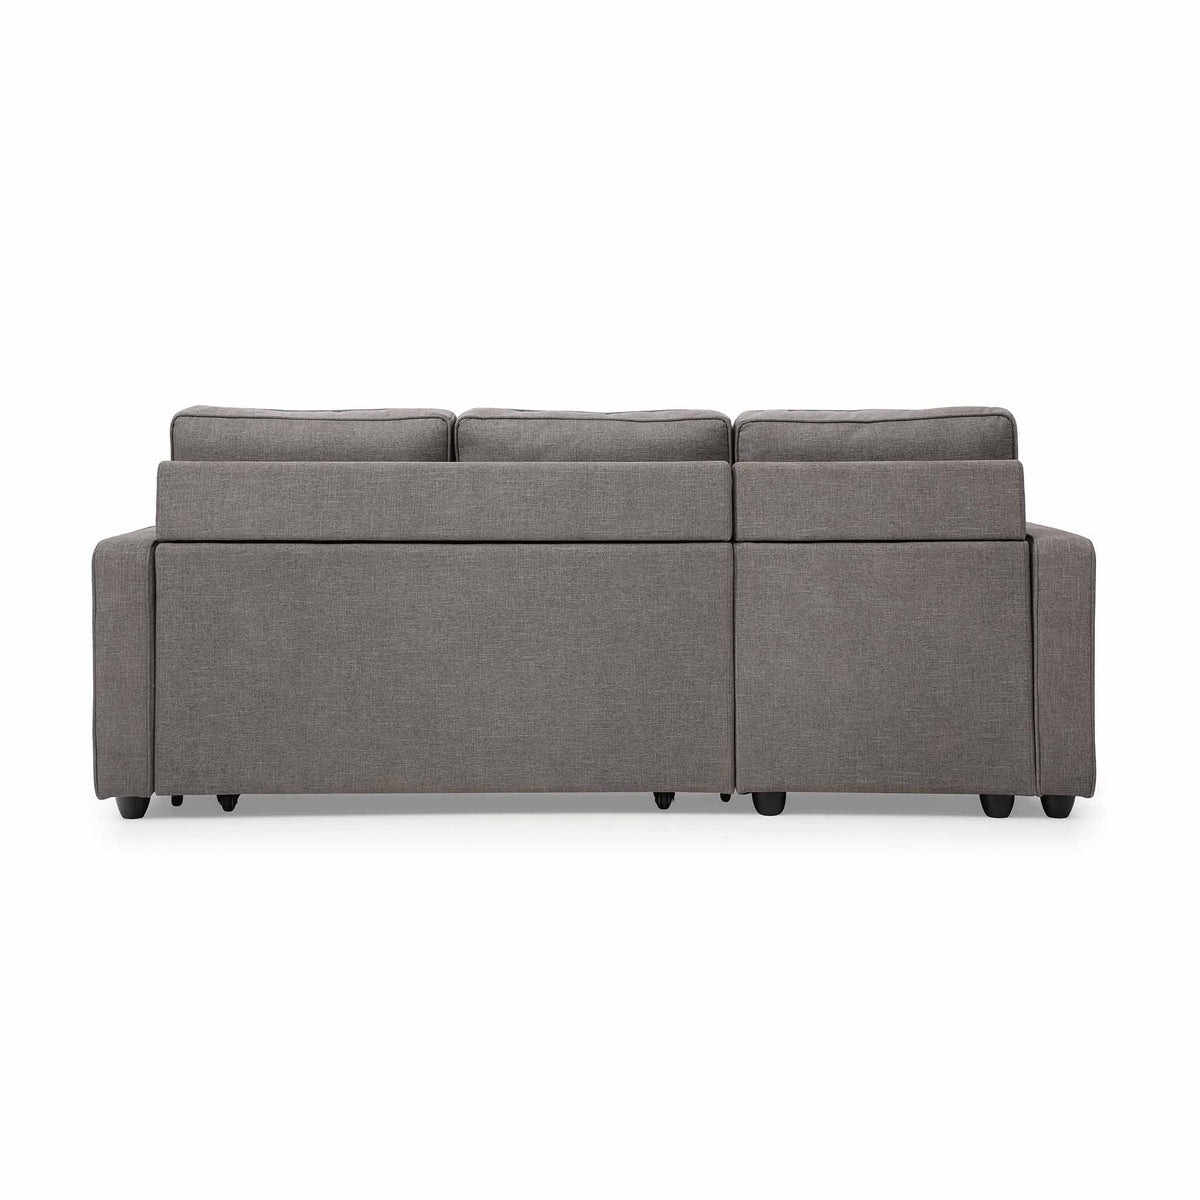 Solr Grey 3 Seater Corner Sofa Bed